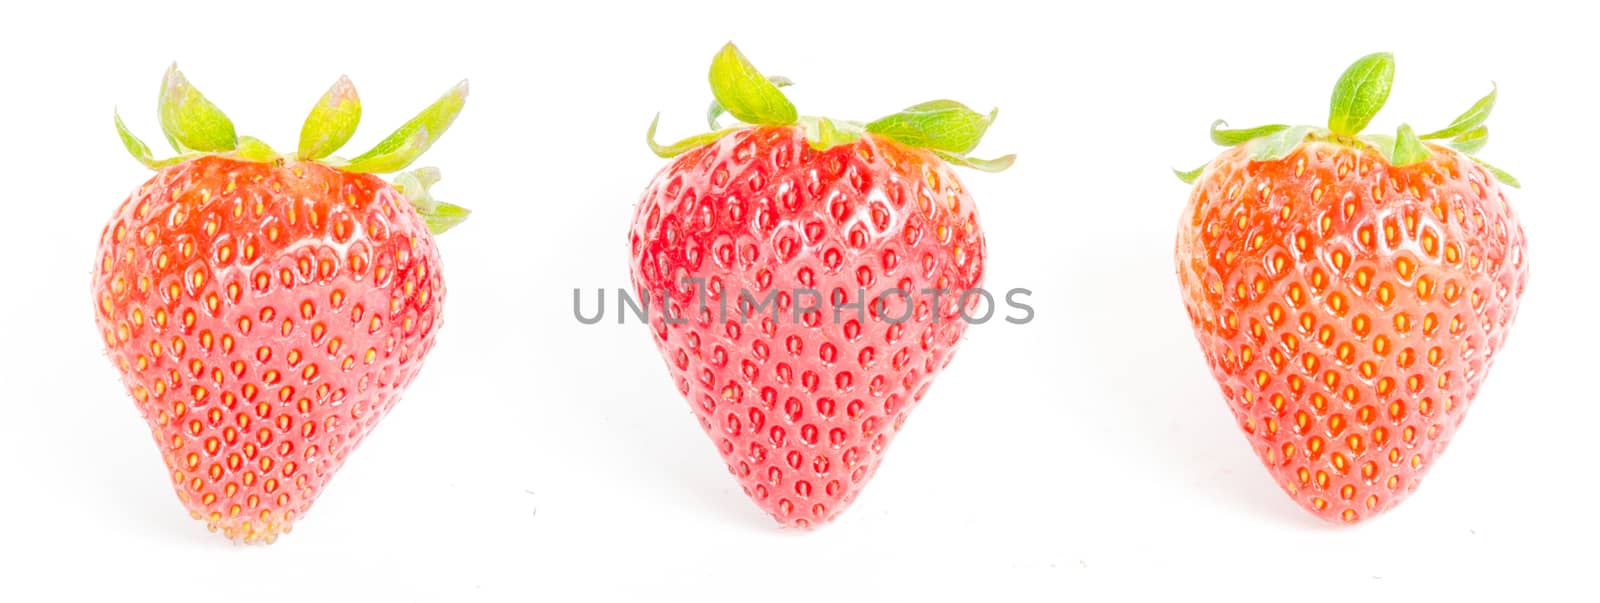 Studio shot single row of three whole organic strawberries isolated on white by trongnguyen